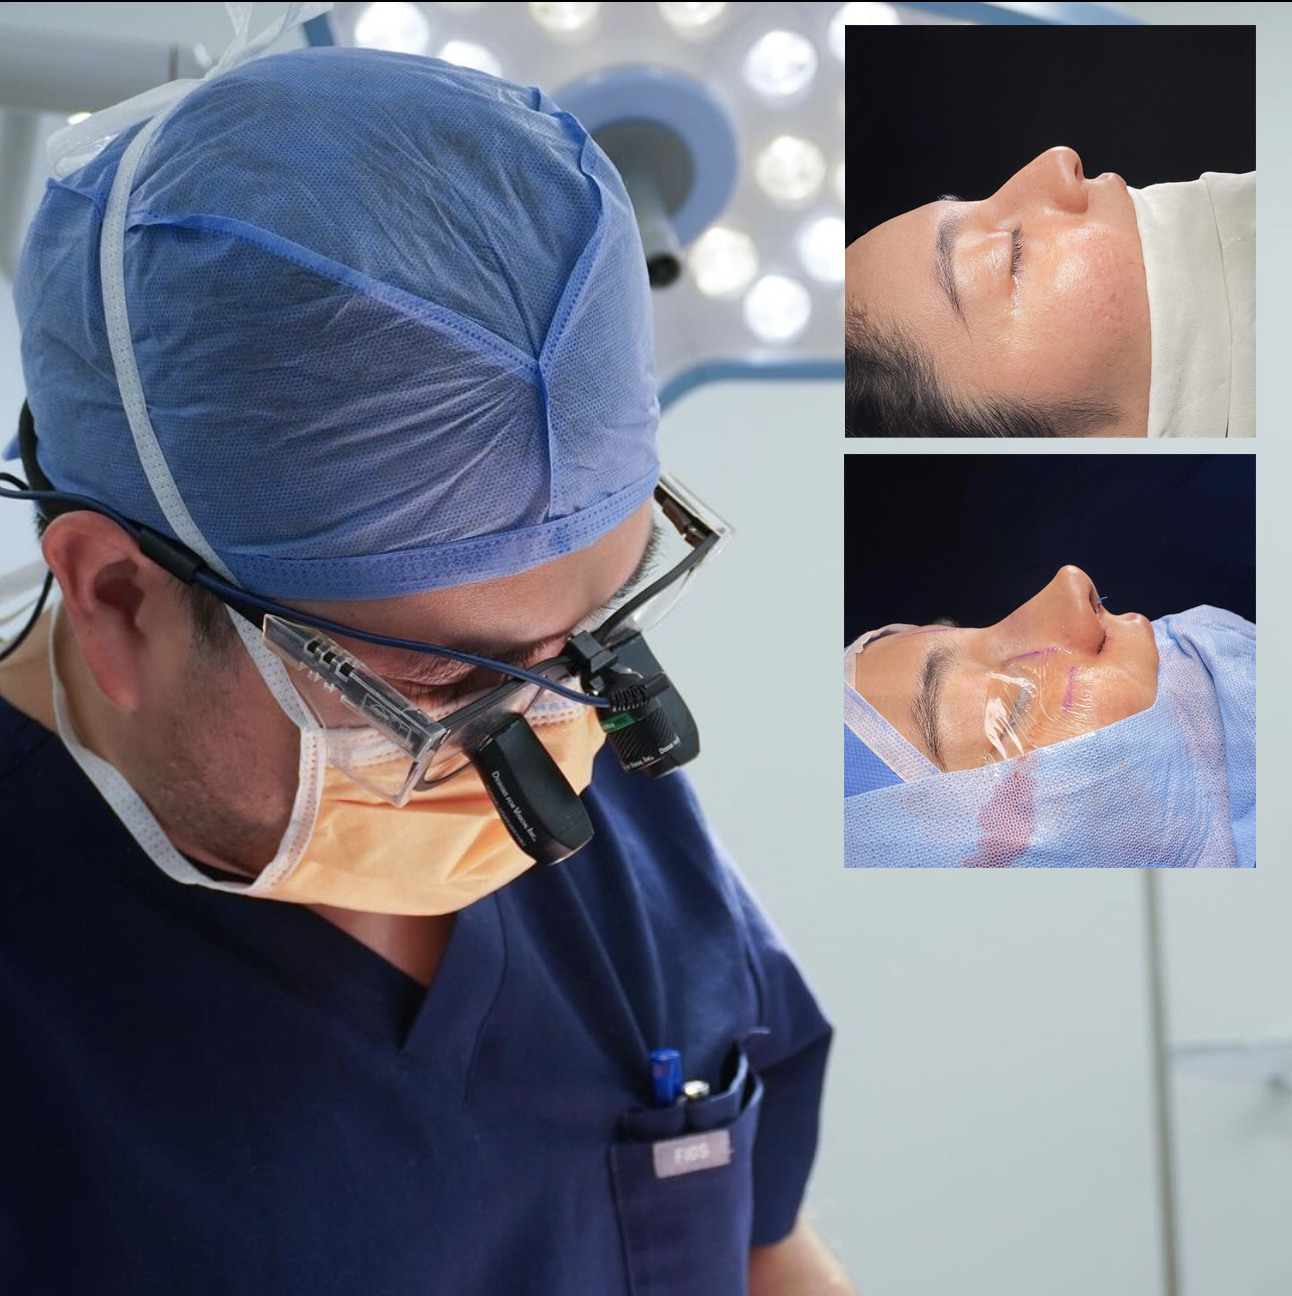 Tijuana Rhinoplasty offering world class facial plastic surgery, specializing in Rhinoplasty by Dr. Edgar Eduardo Santos.